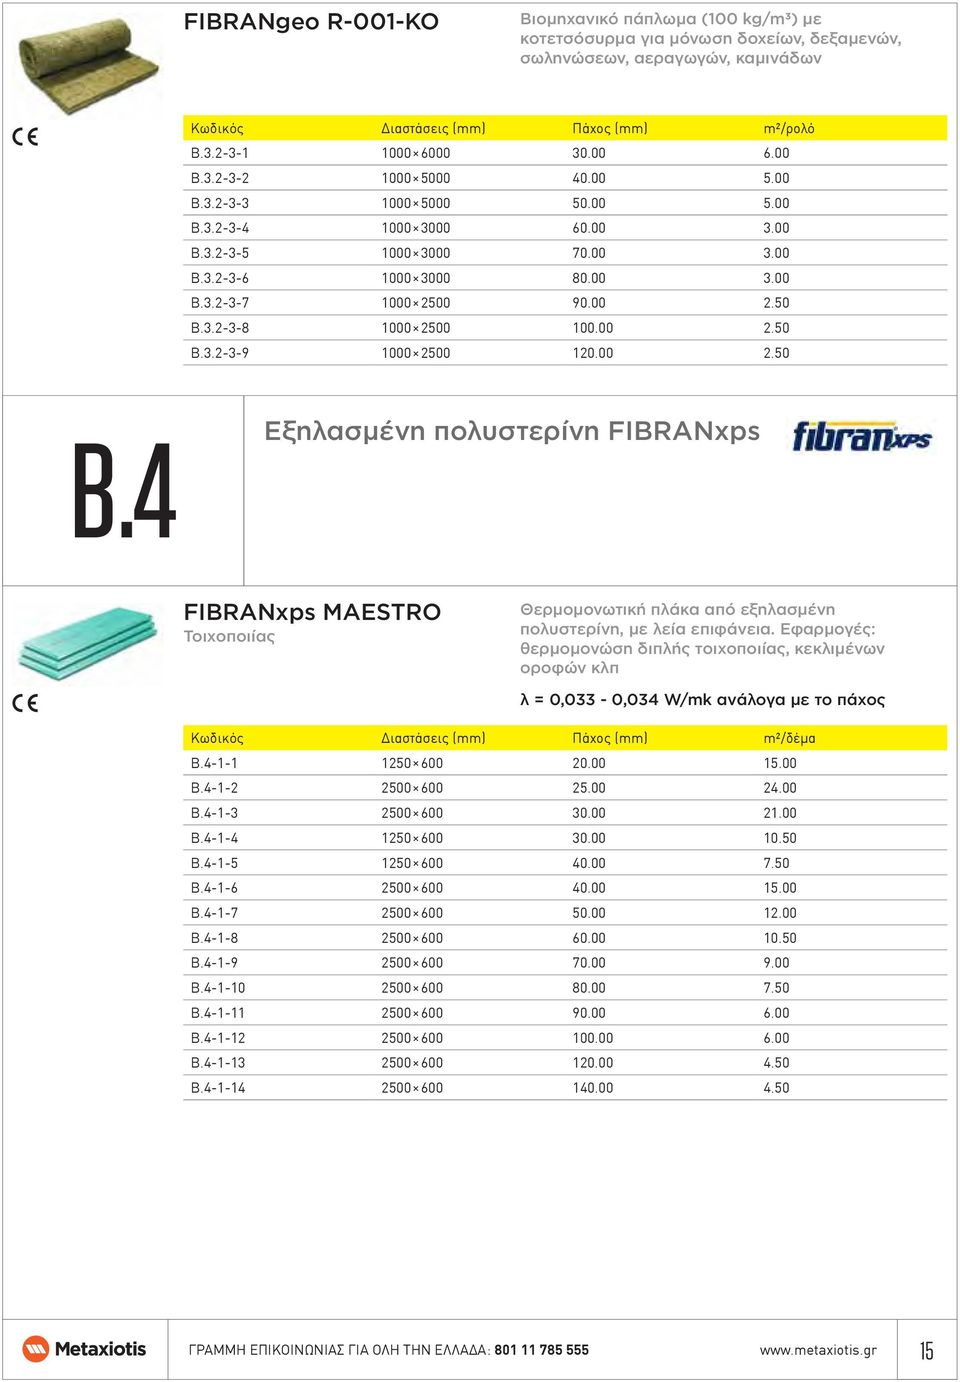 00 2.50 B.3.2-3-9 1000 2500 120.00 2.50 B.4 Εξηλασμένη πολυστερίνη FIBRANxps FIBRANxps MAESTRO Τοιχοποιίας Θερμομονωτική πλάκα από εξηλασμένη πολυστερίνη, με λεία επιφάνεια.